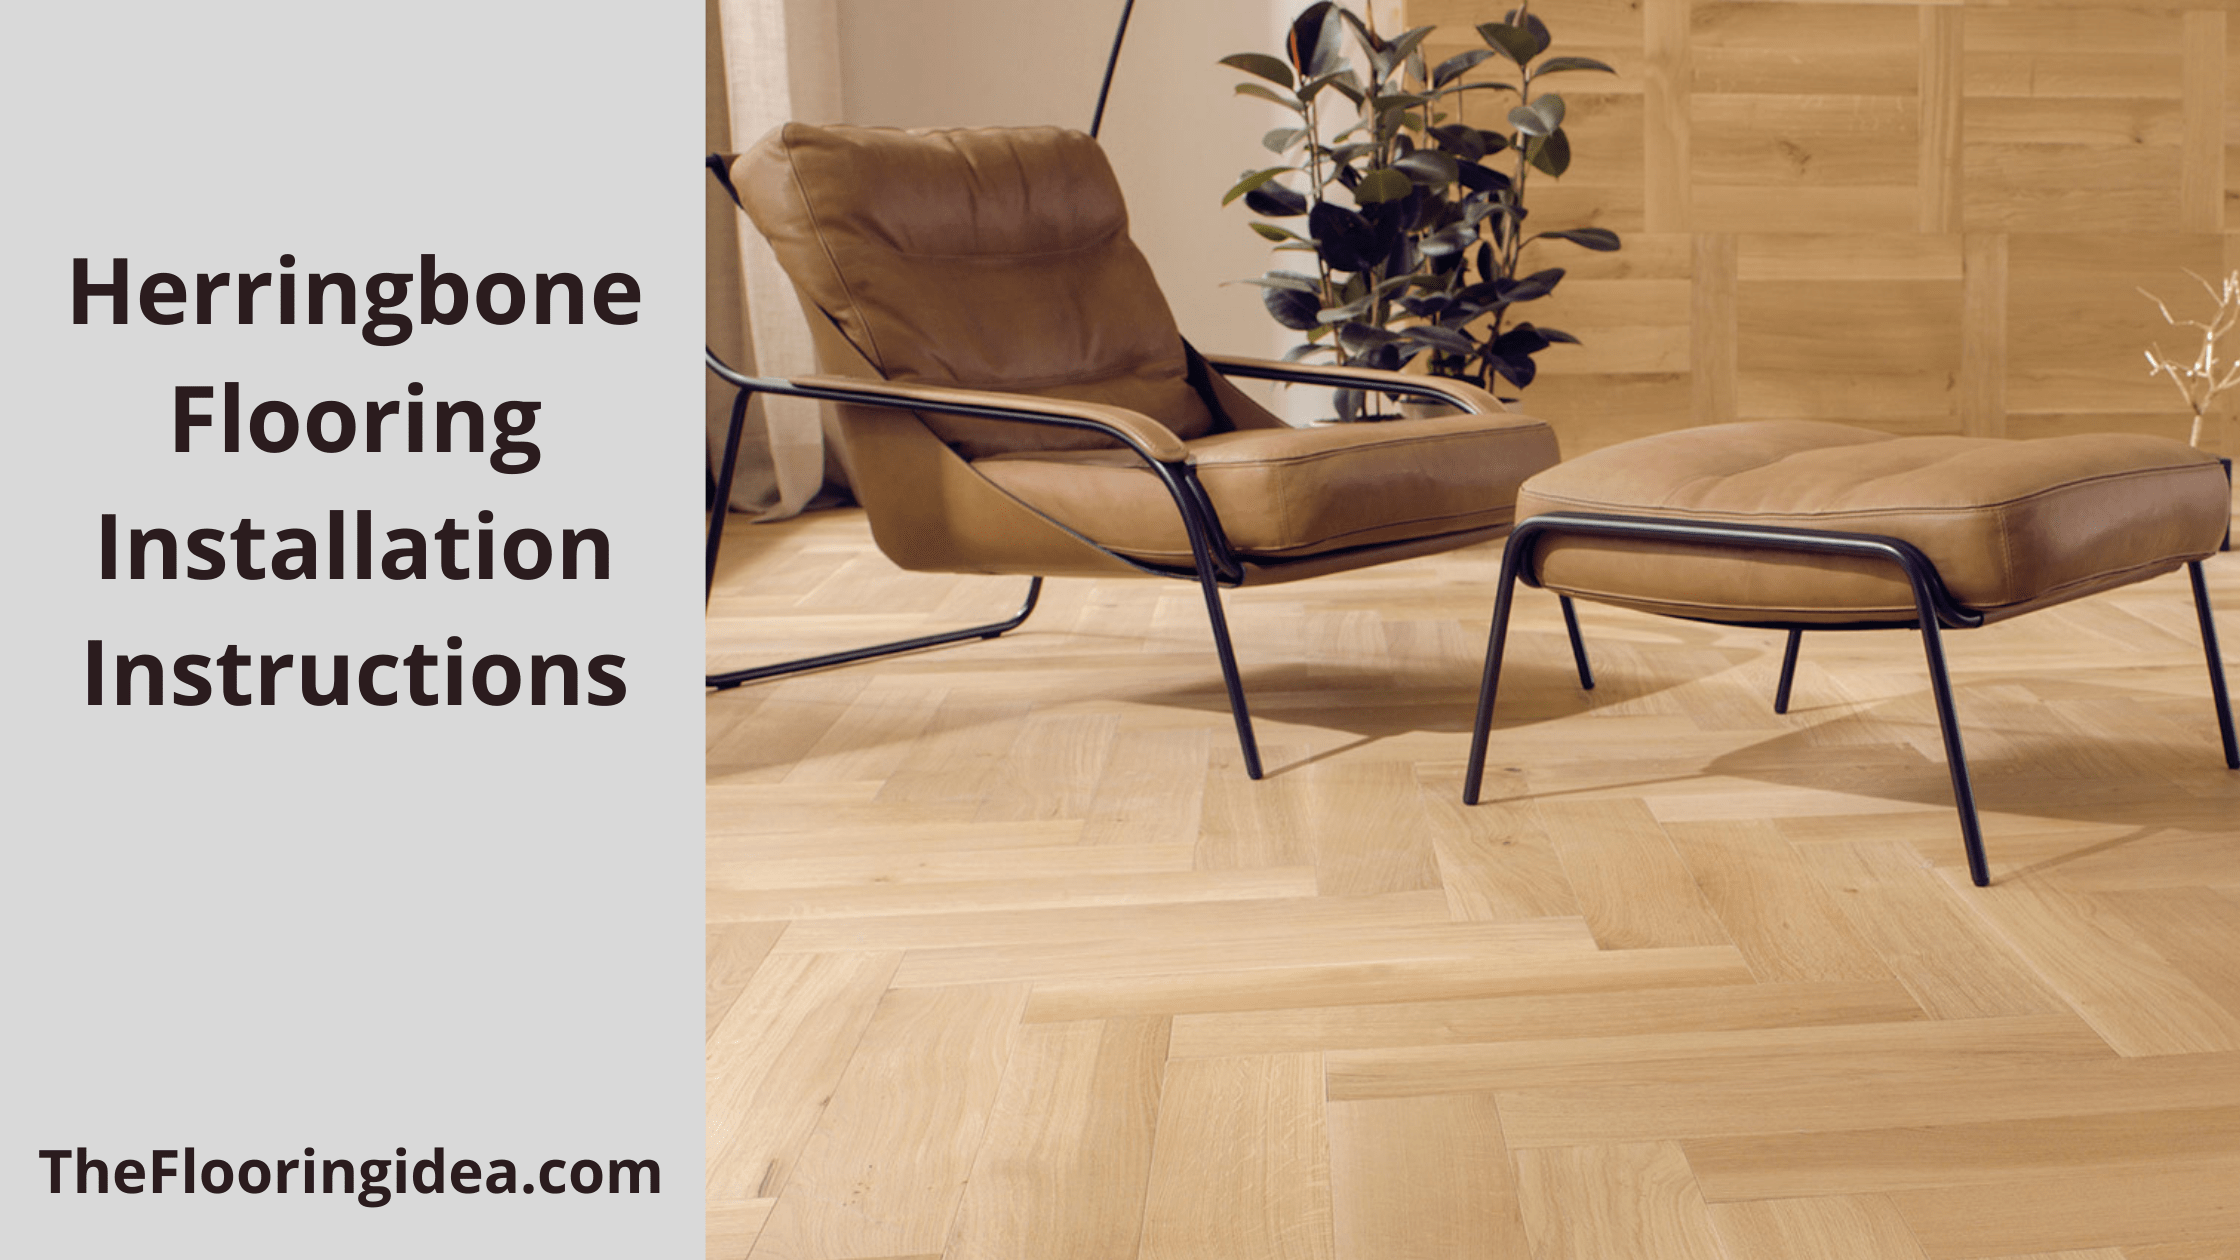 Installation Instructions for Herringbone Flooring